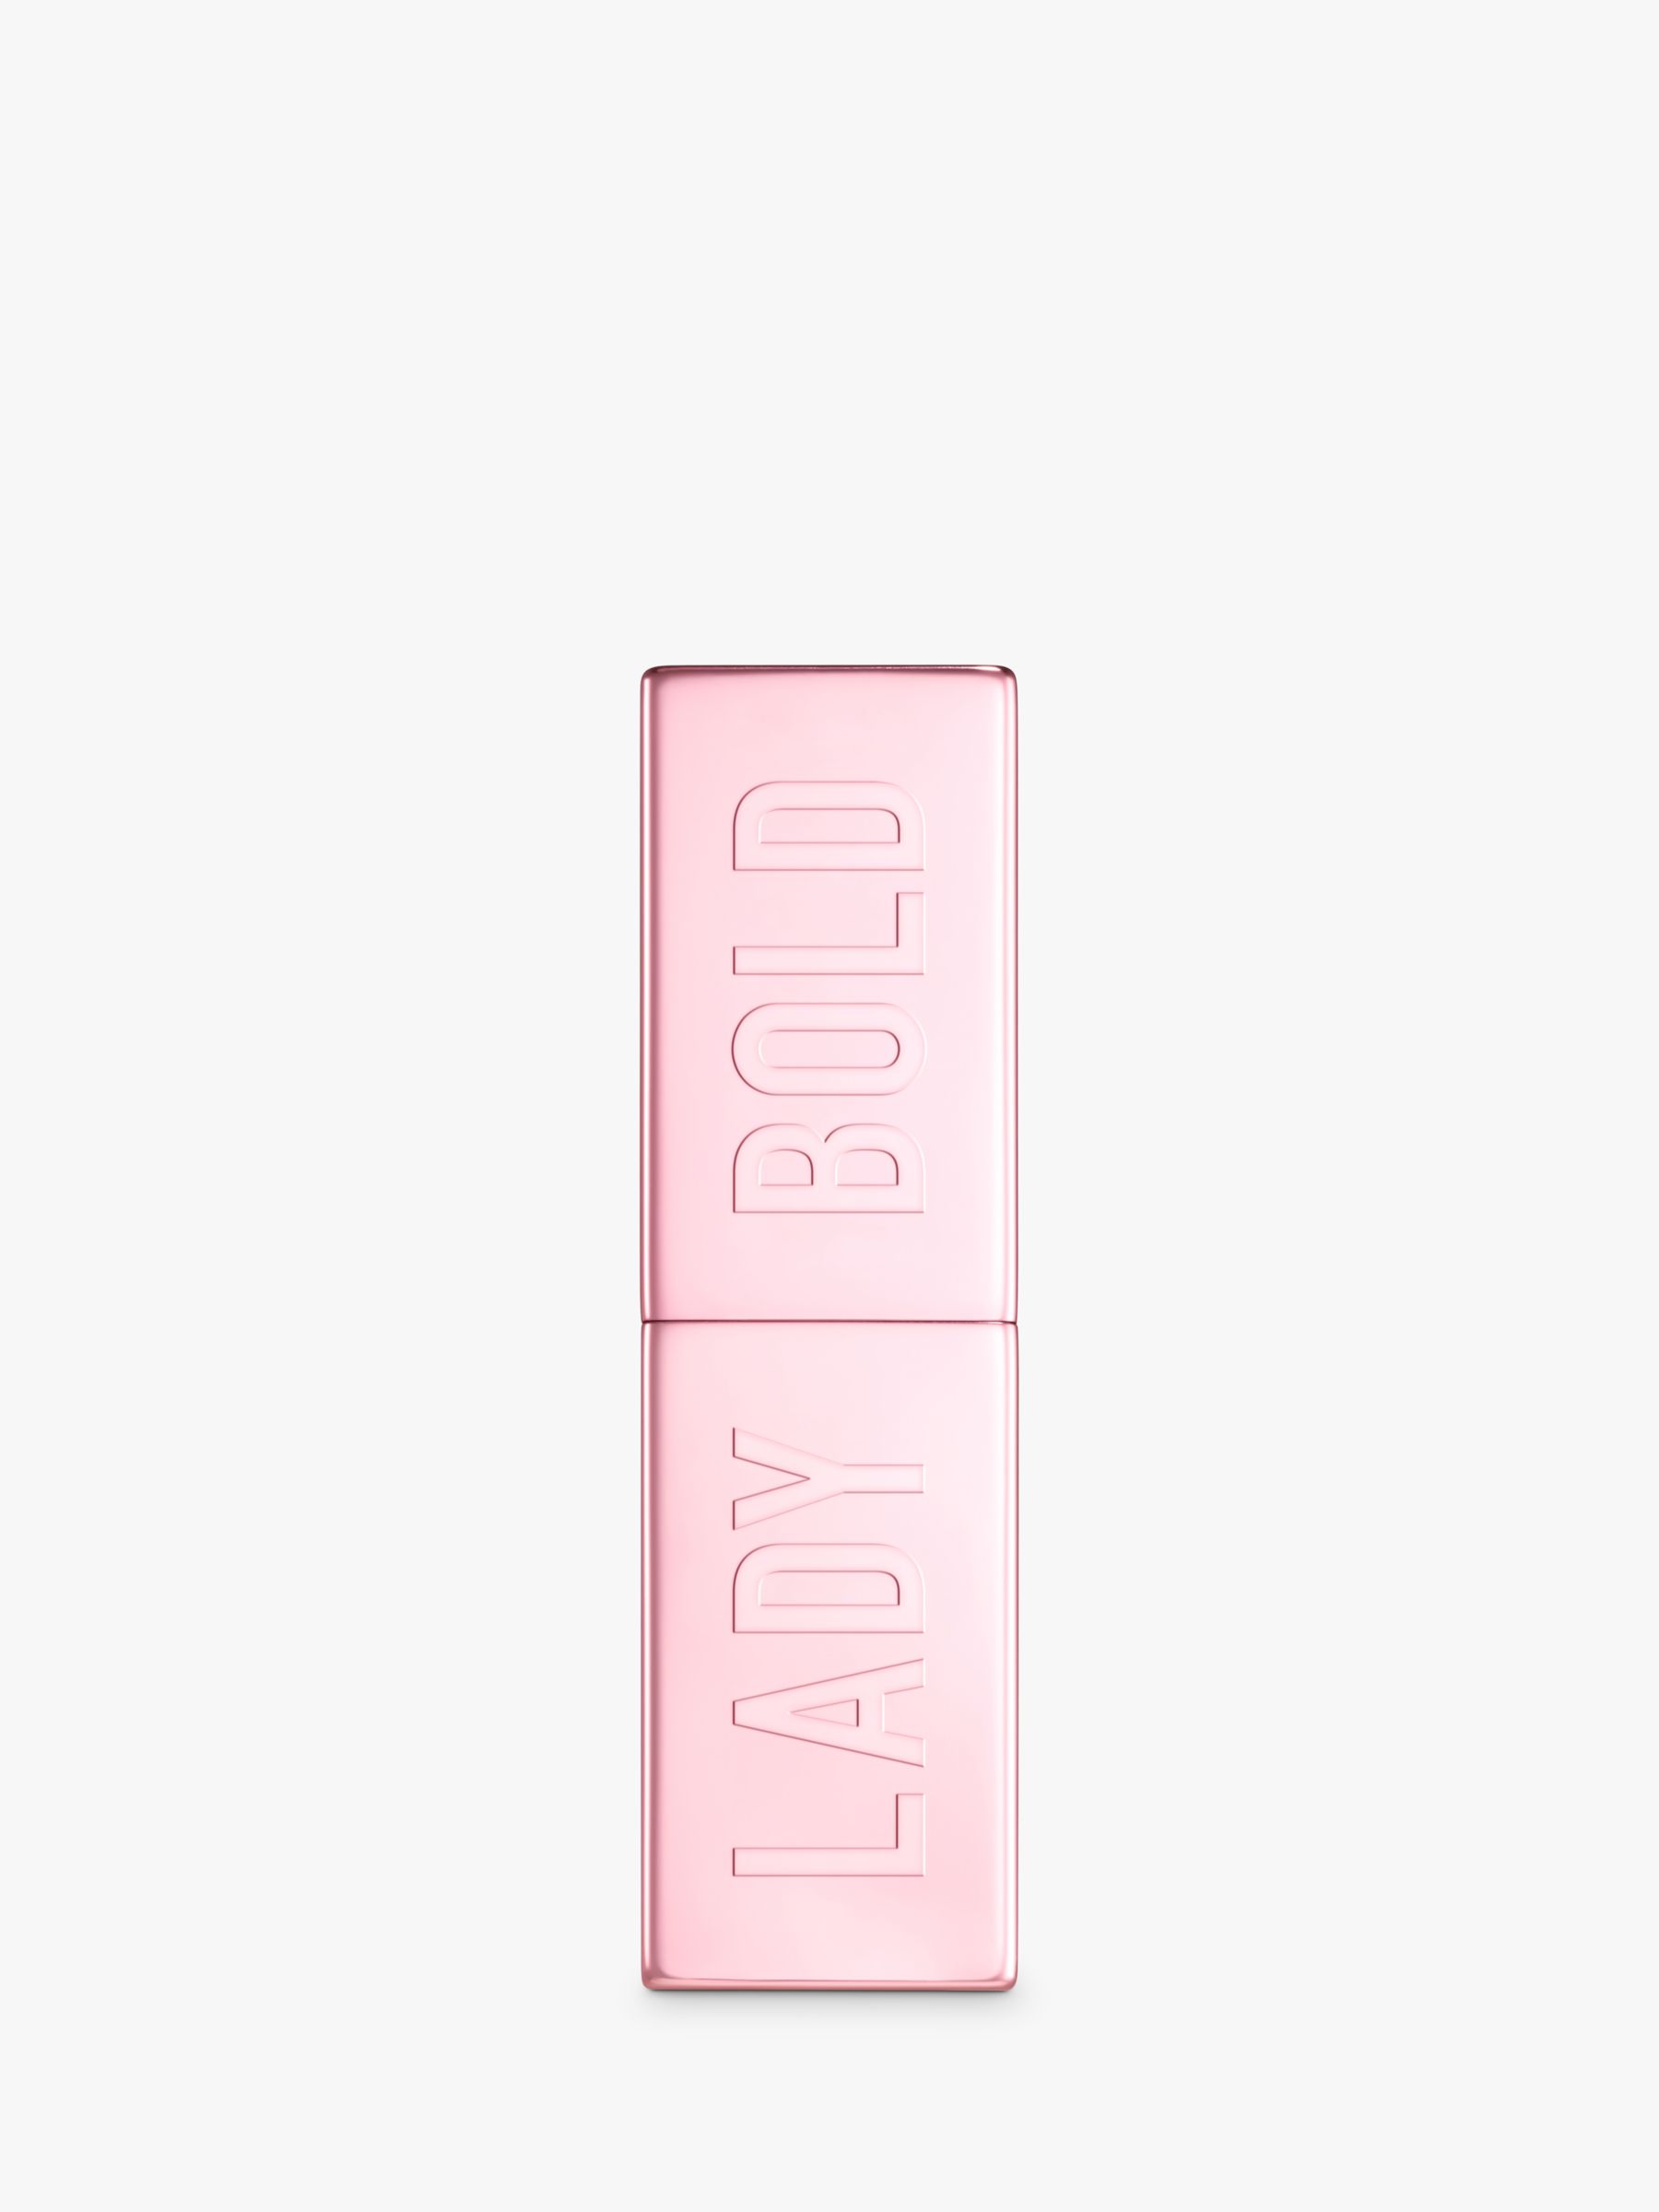 Too Faced Lady Bold Em-Power Pigment Cream Lipstick, Dear Diary 7